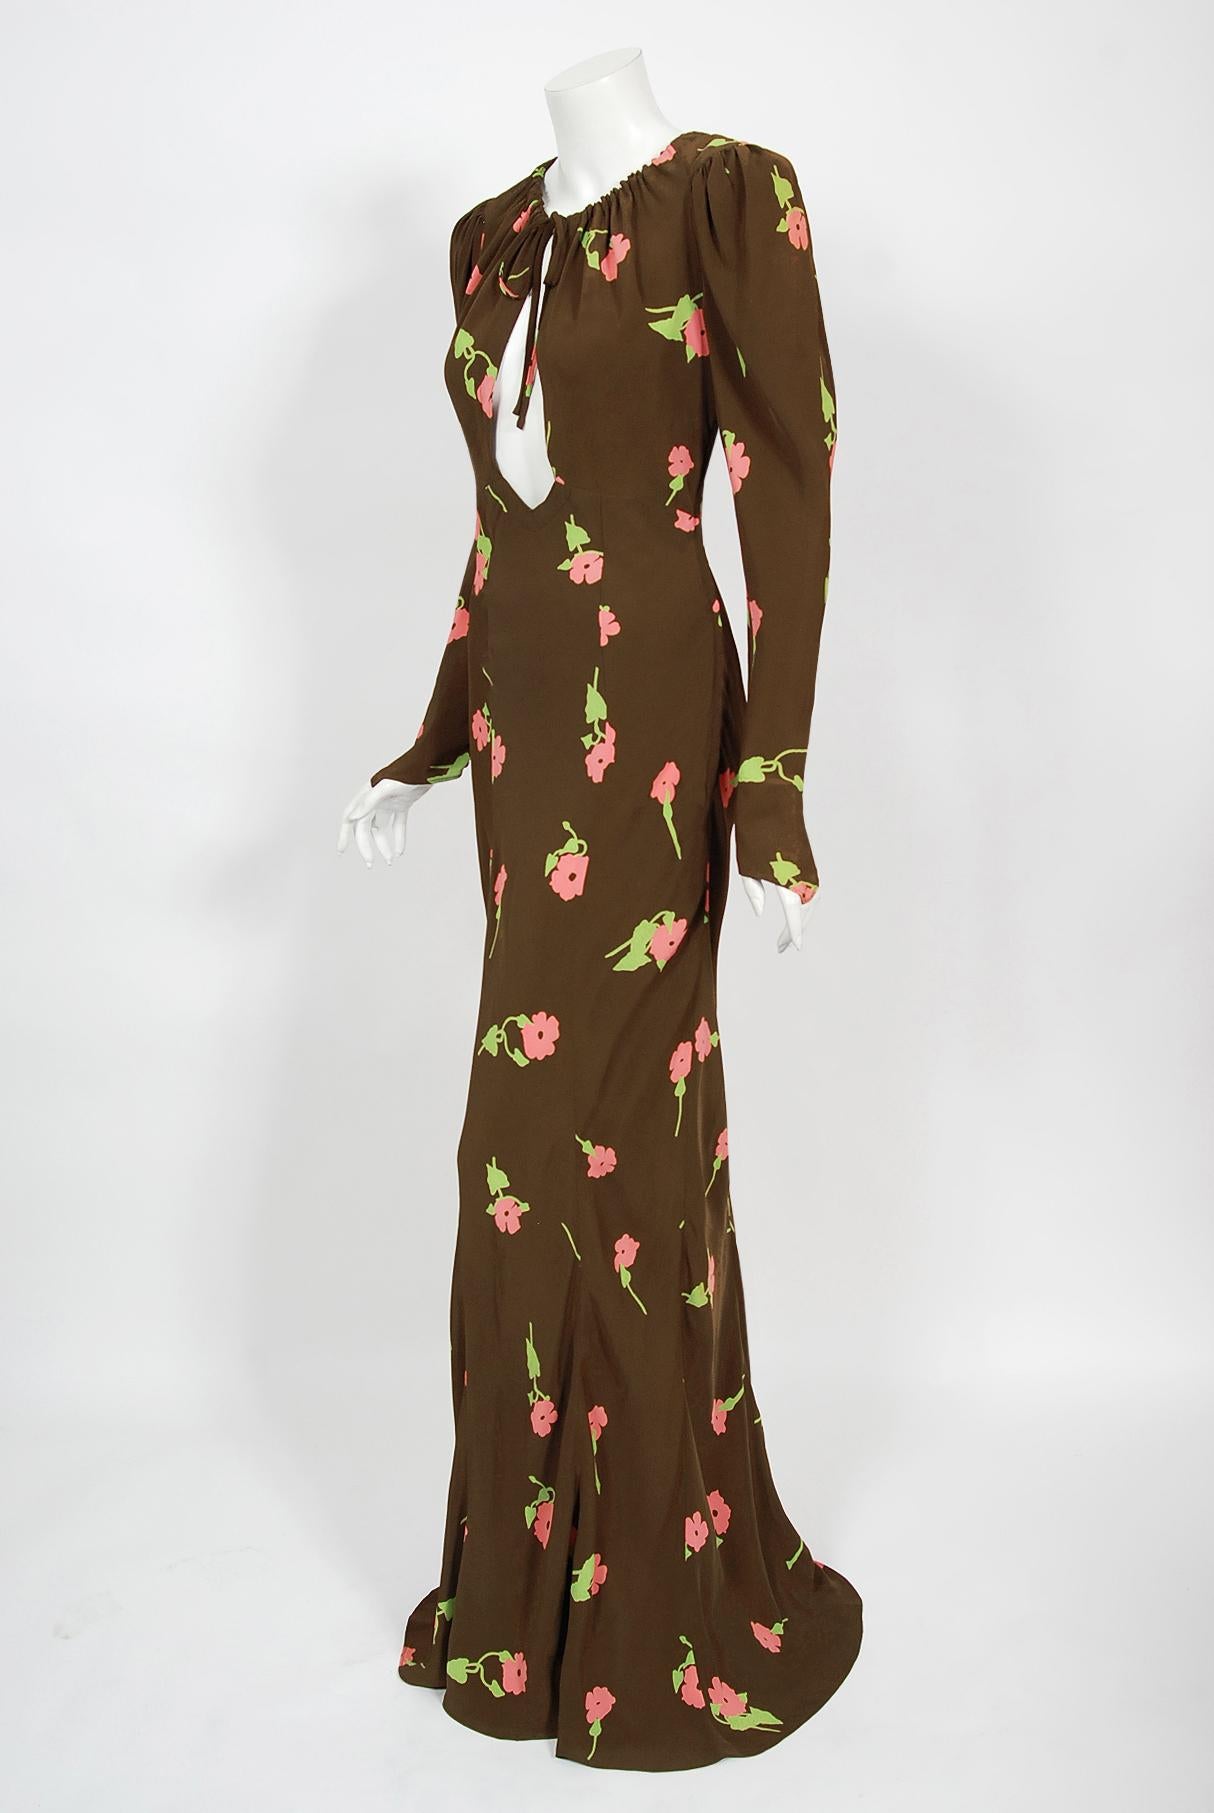 Vintage 1972 Ossie Clark 'Busy Lizzie' Celia Birtwell Floral Print Bias-Cut Gown 1